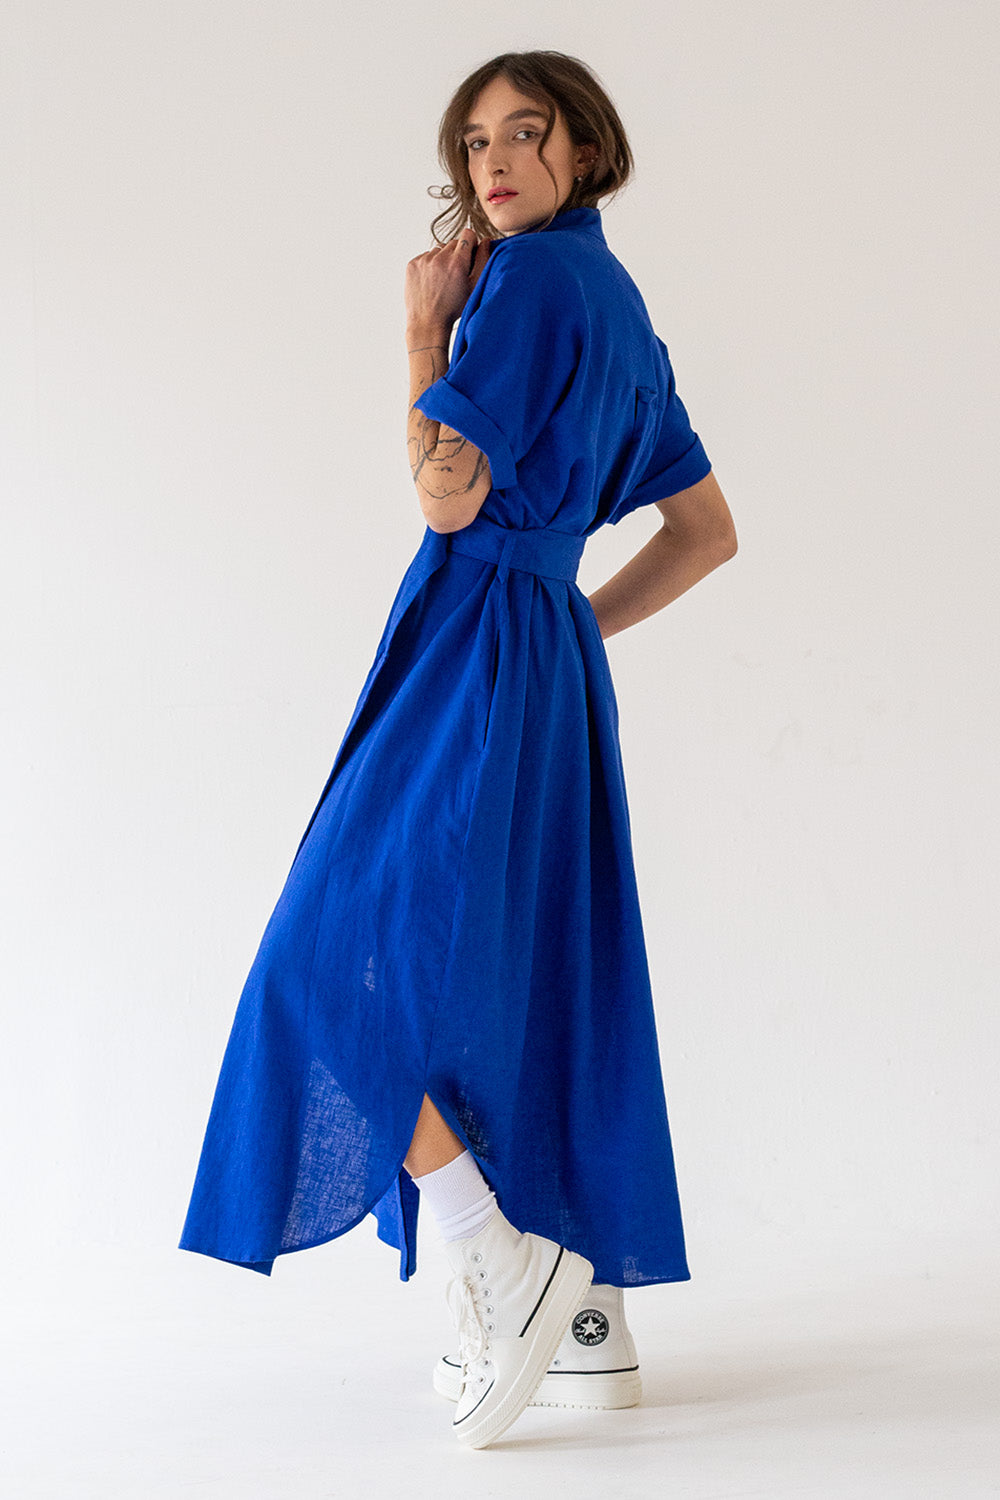 LINEN SHIRT DRESS WITH SHORT SLEEVES -  ROYAL BLUE